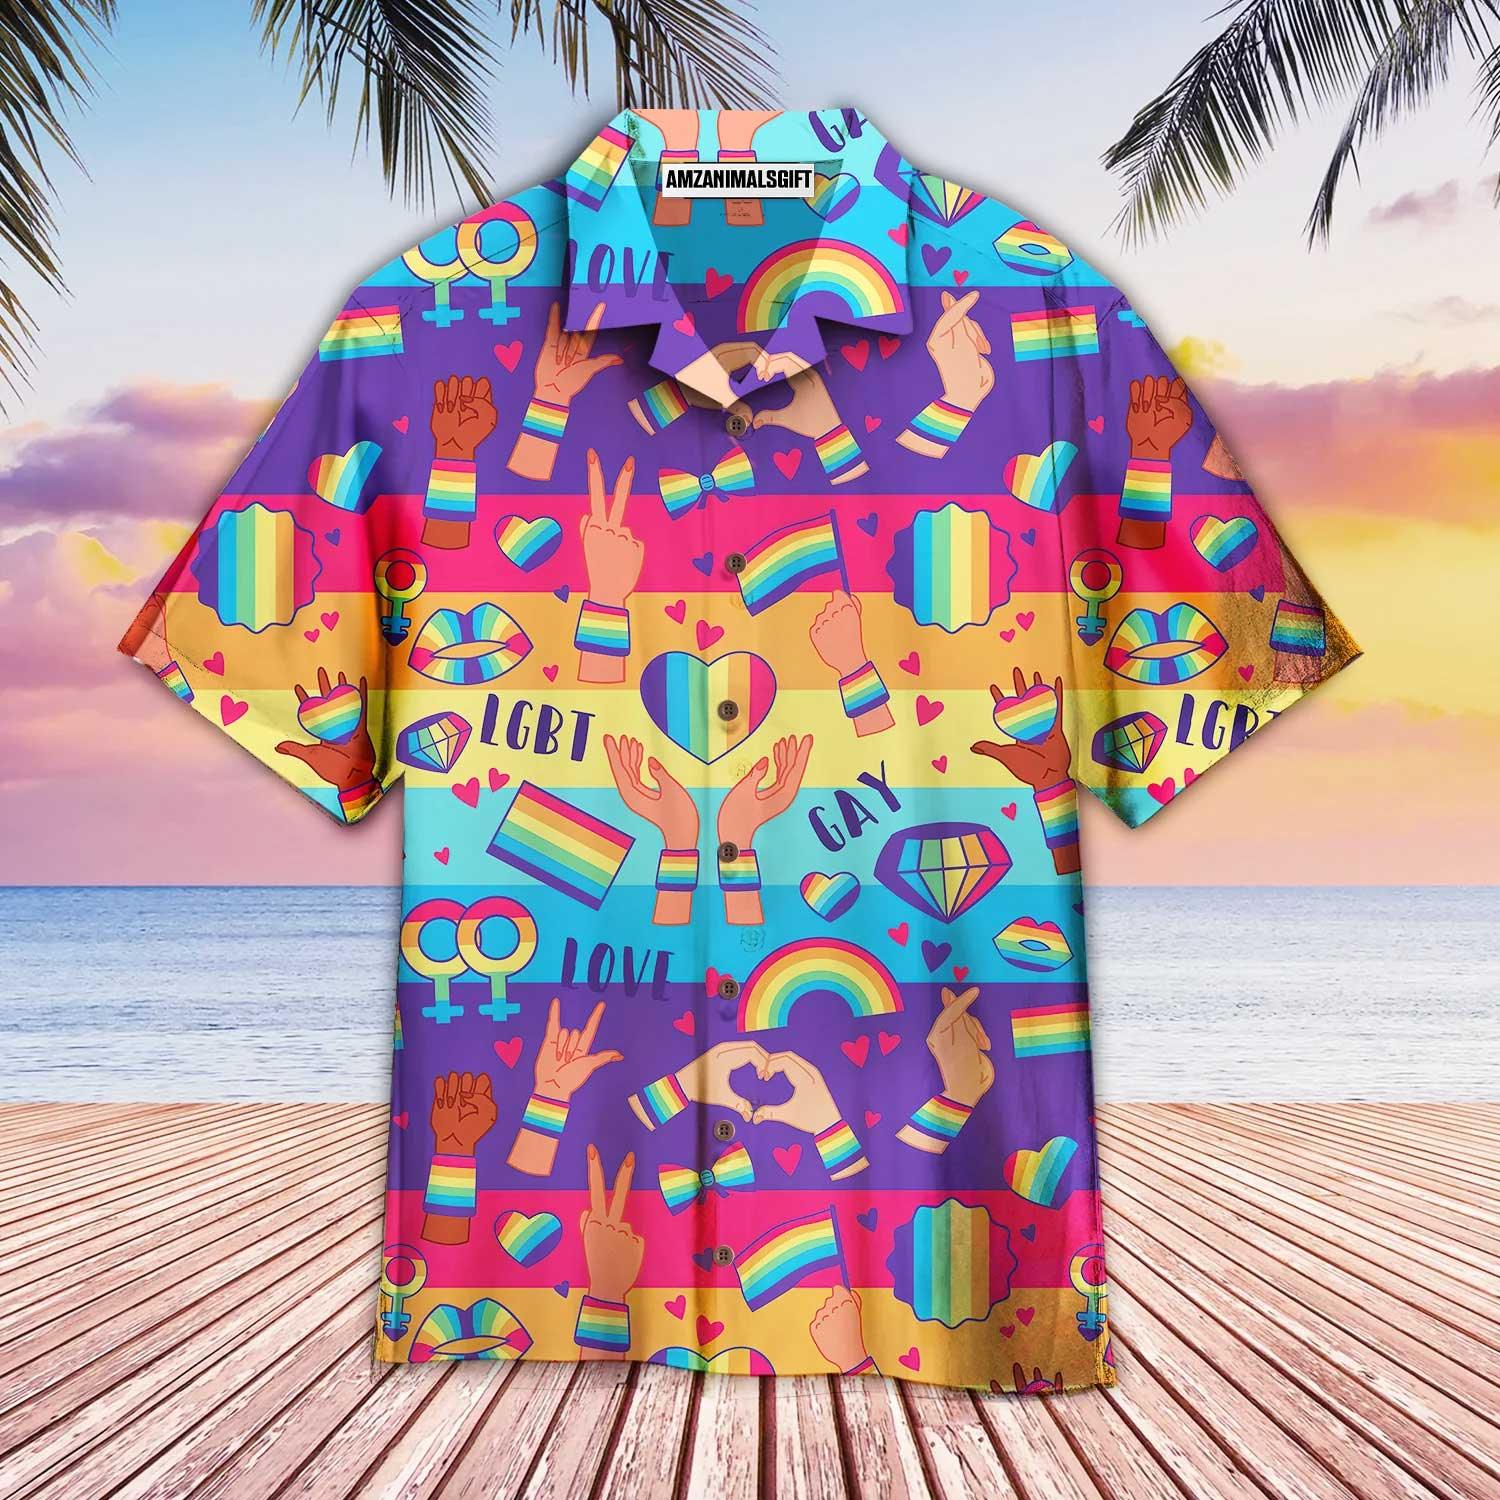 LGBT Aloha Hawaiian Shirts For Summer, Rights Symbols LGBT Rainbow Colorful Happy Pride Hawaiian Shirts, Pride Gift For Gaymer And Lesbian, Friend - Amzanimalsgift